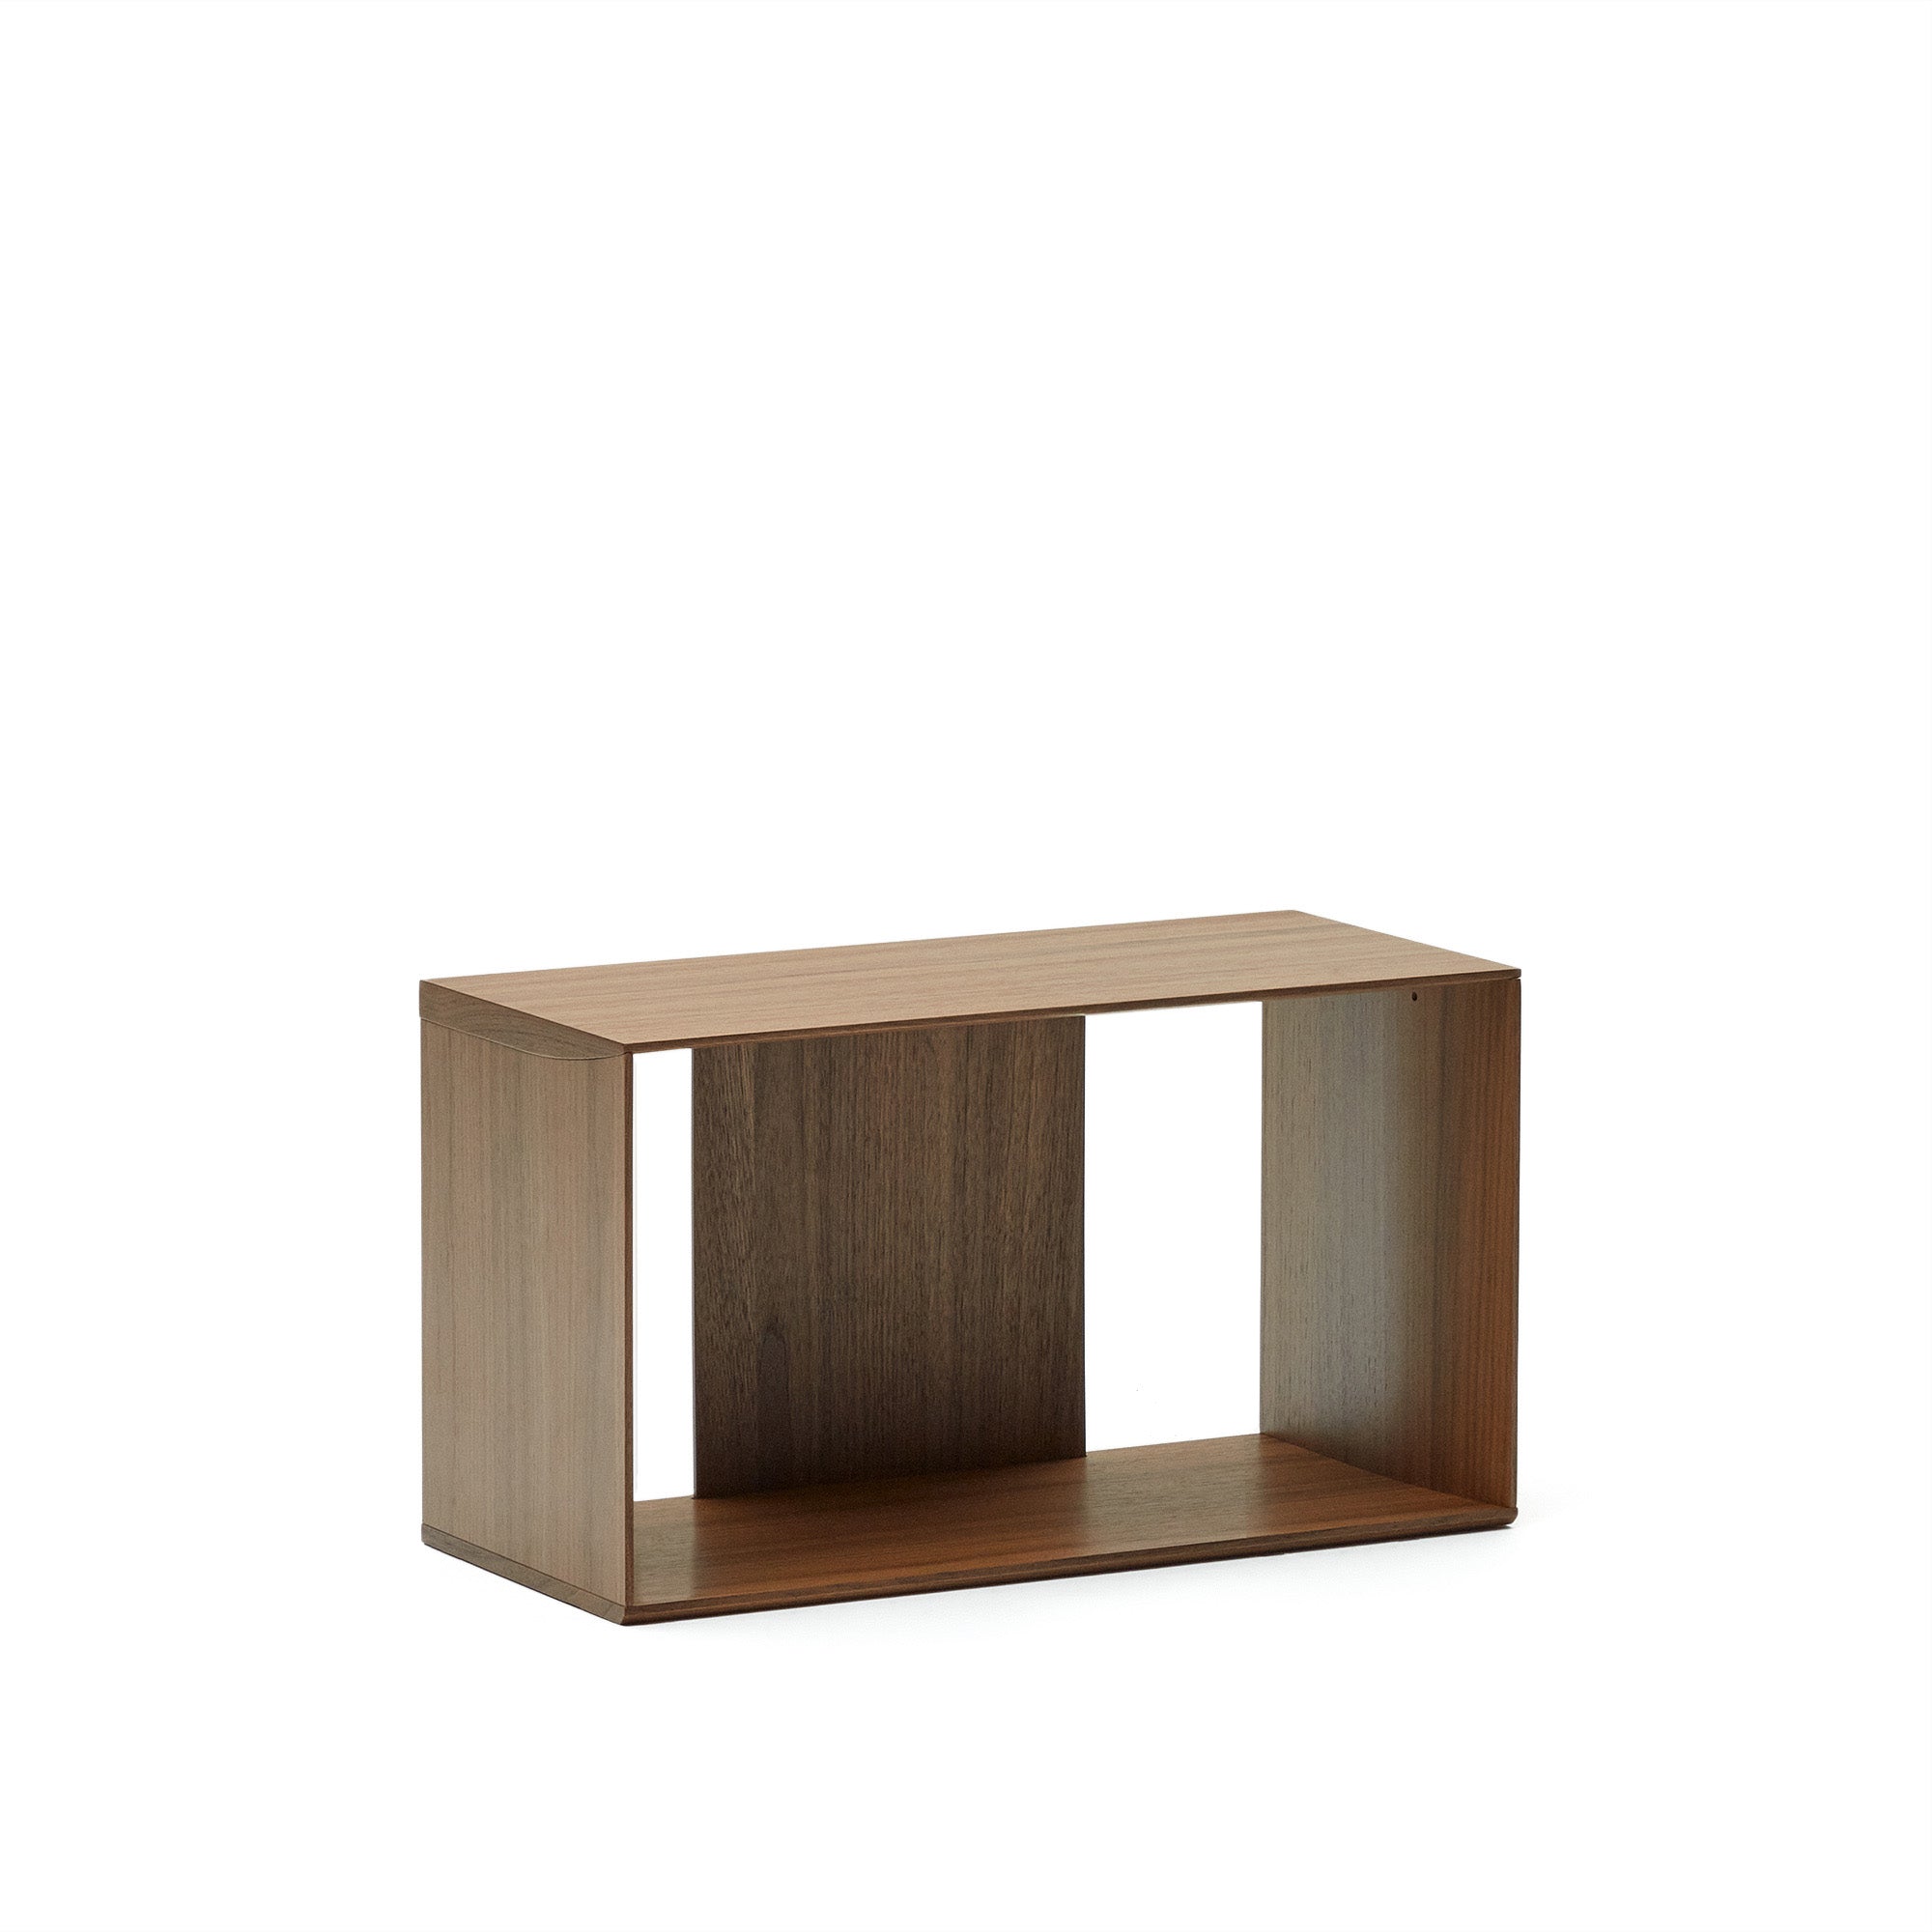 Litto medium shelf module in walnut veneer, 67 x 38 cm